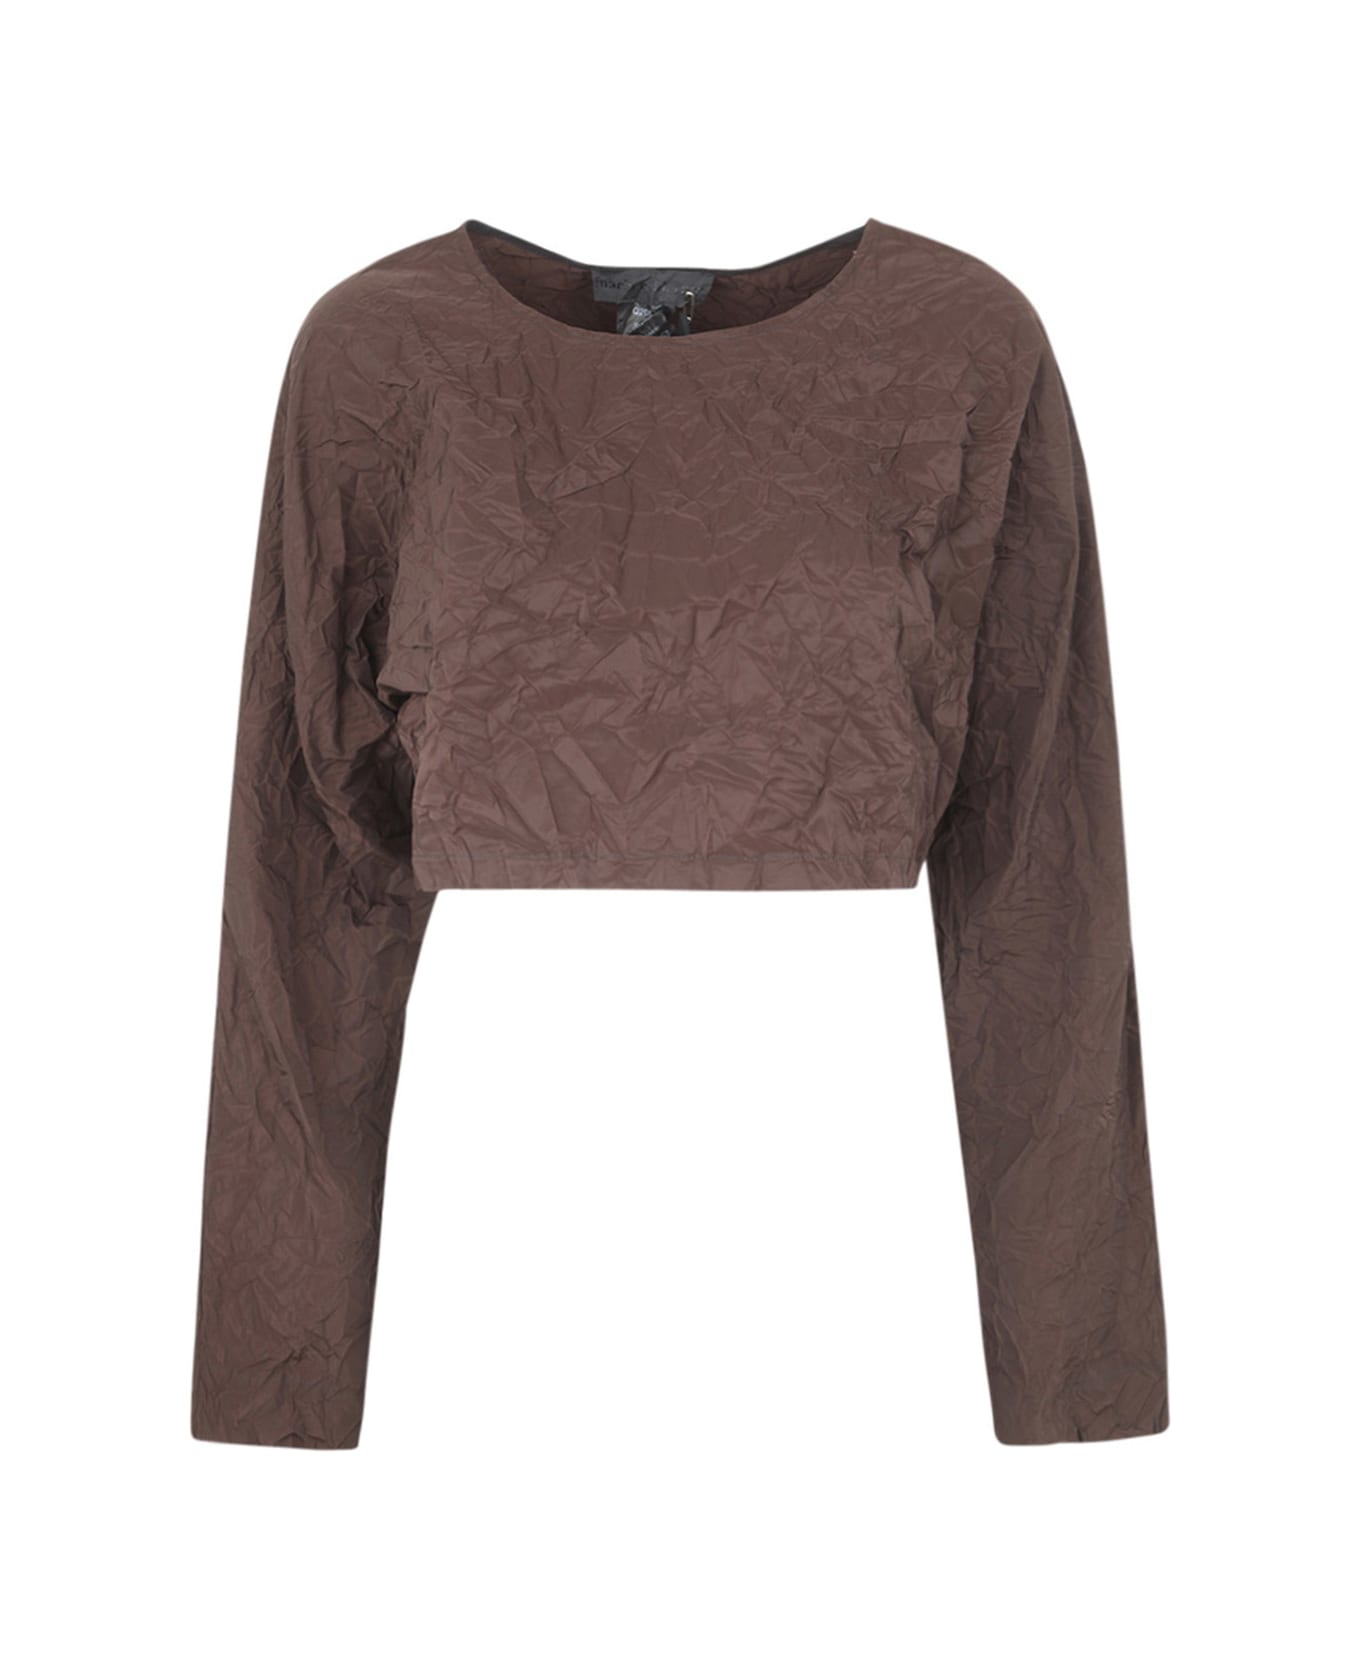 Maria Calderara Crinkled Opaque Taffeta Sweater - Dark Chocolate ニットウェア